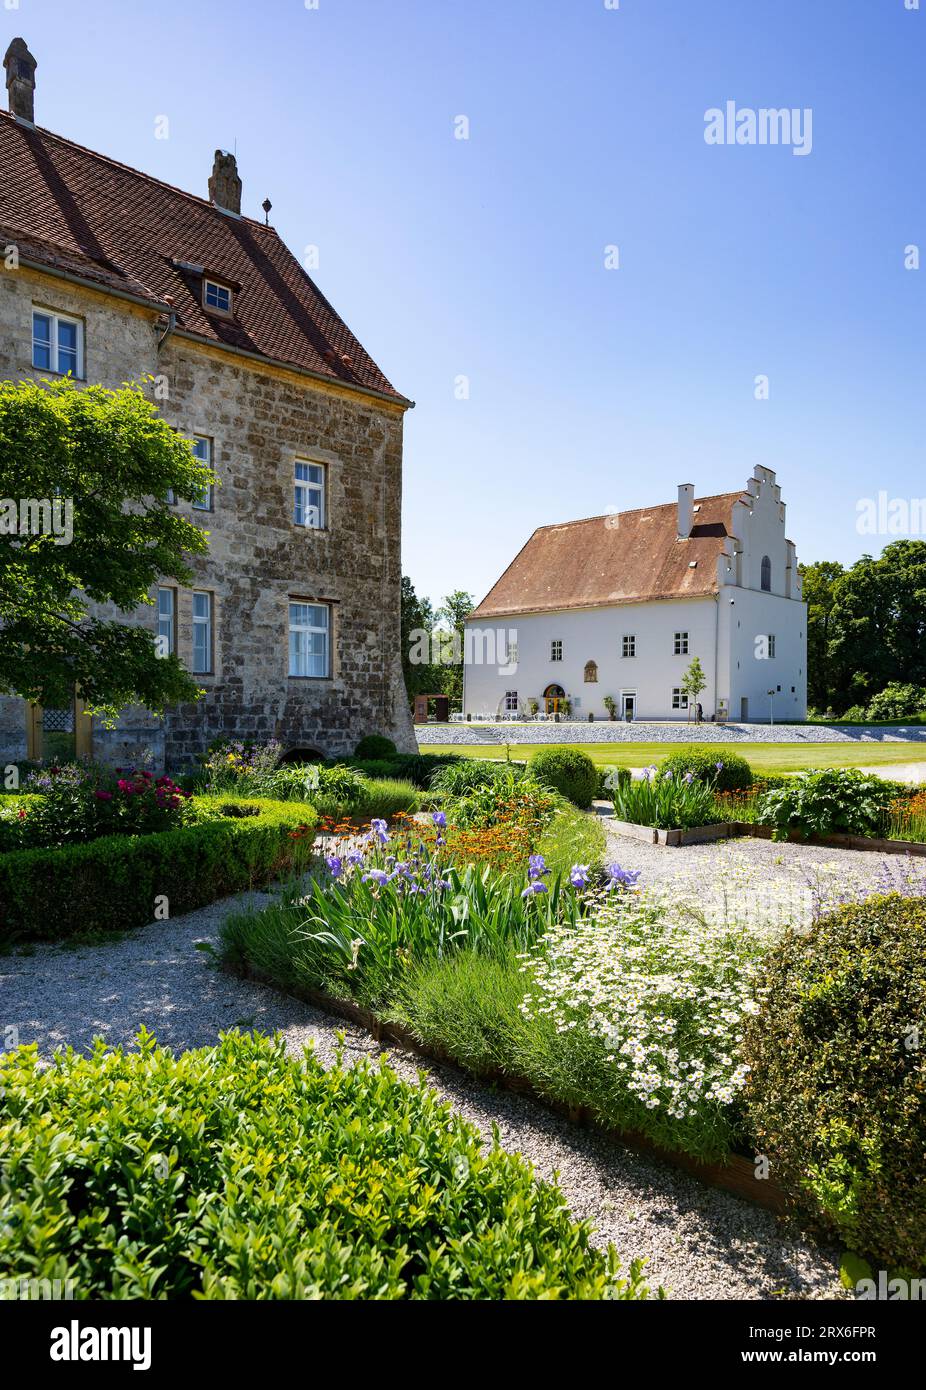 Austria, Upper Austria, Obernberg am Inn, Flowers blooming in garden of Obernberg Castle Stock Photo